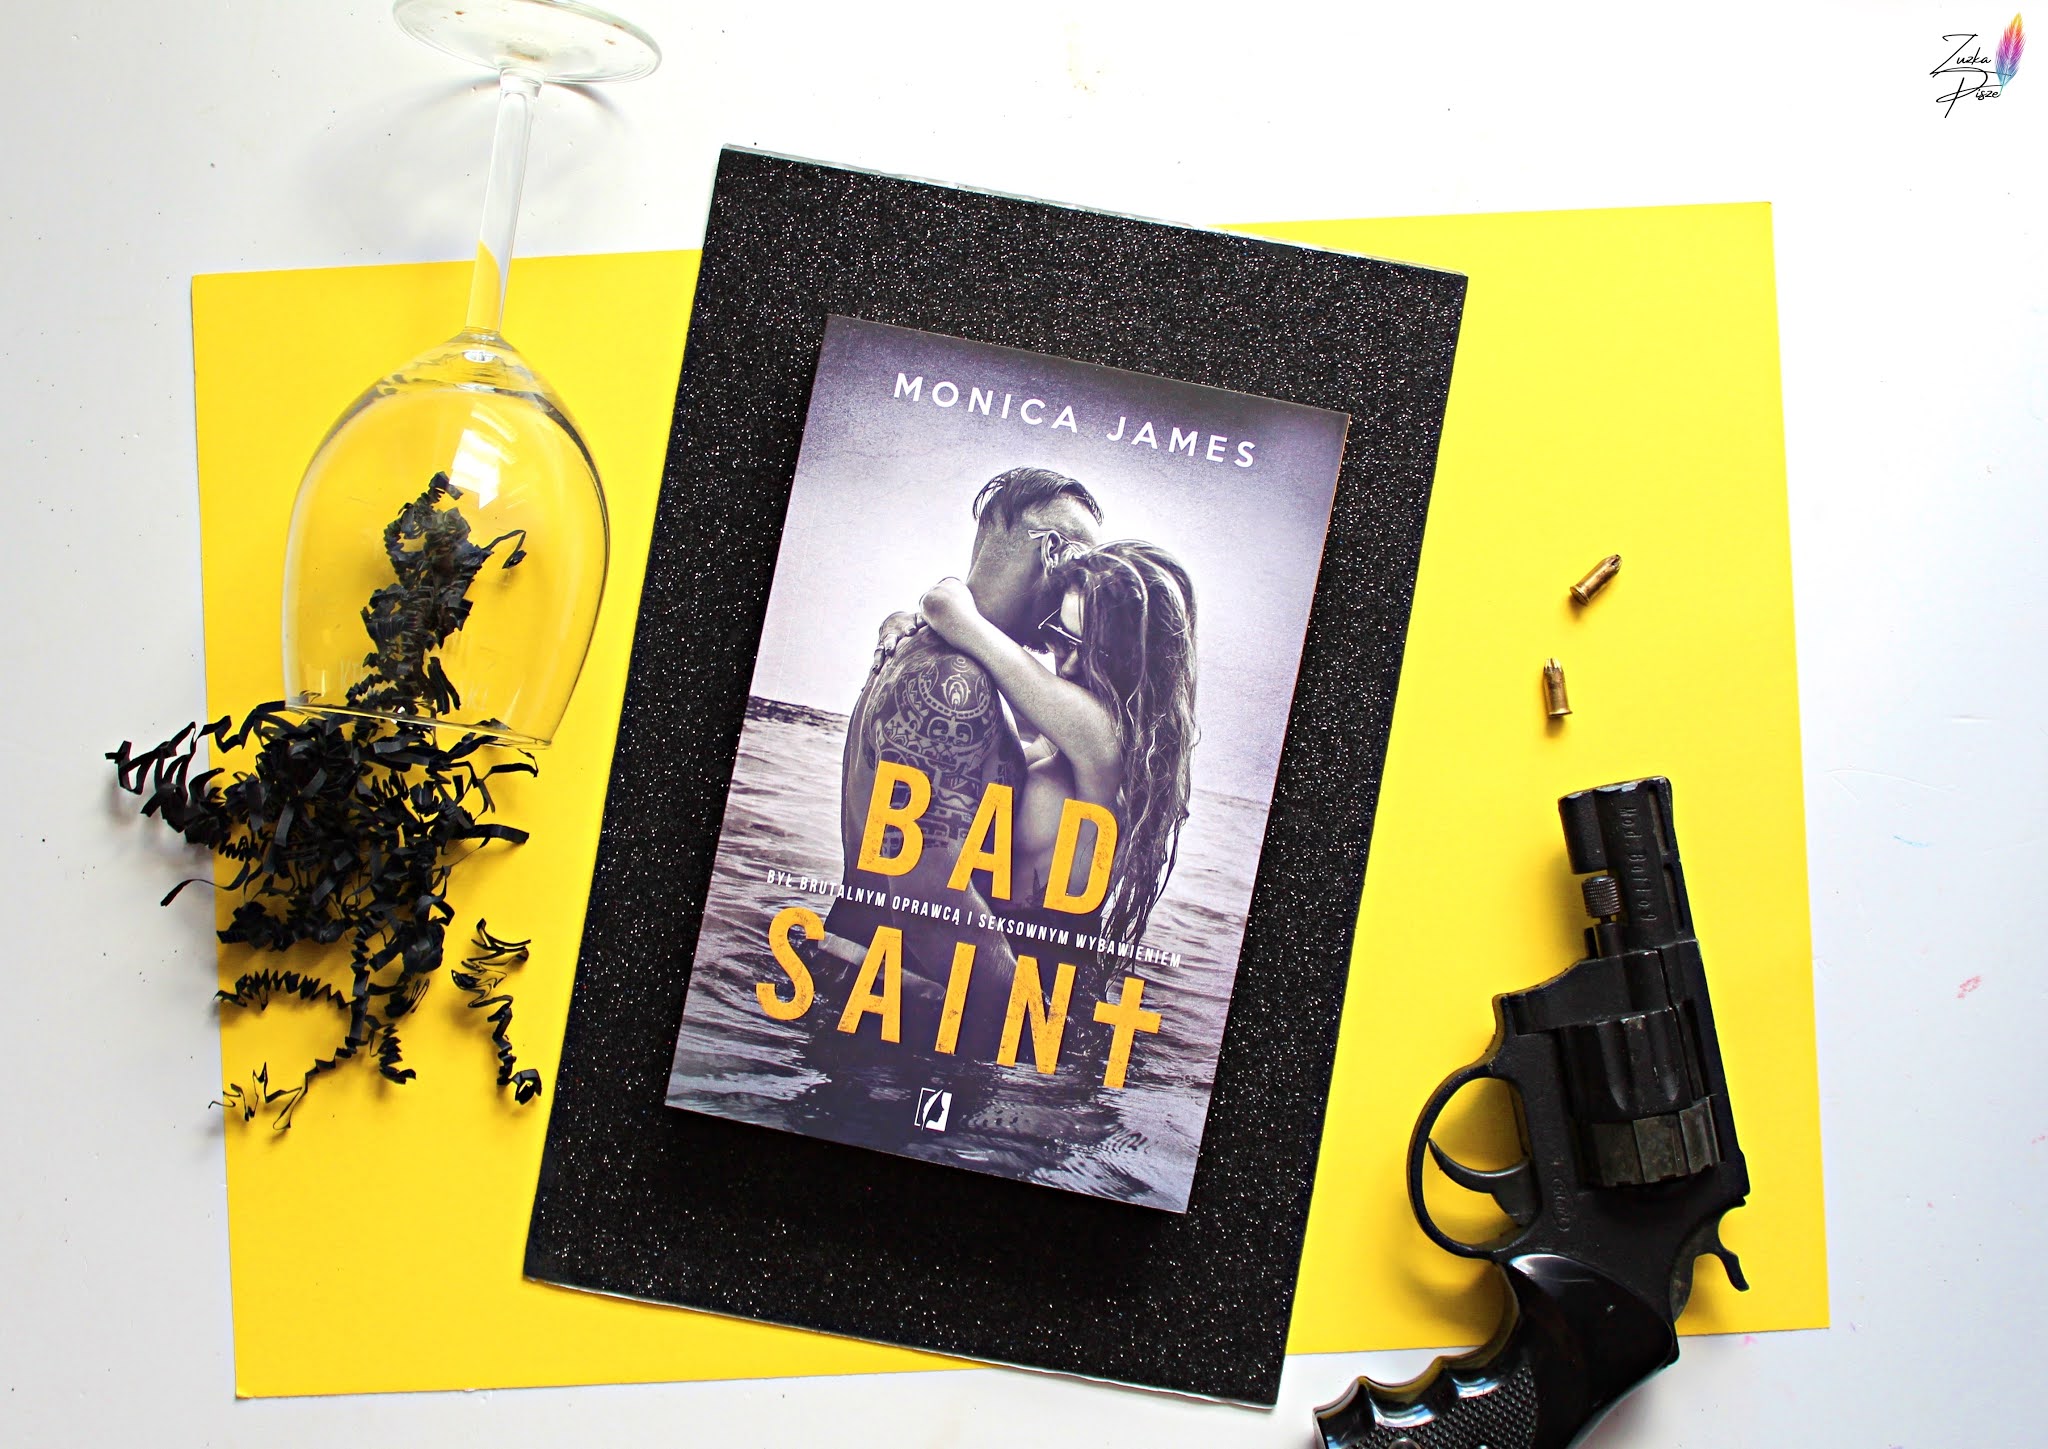 Monica James "Bad Saint" - recenzja książki